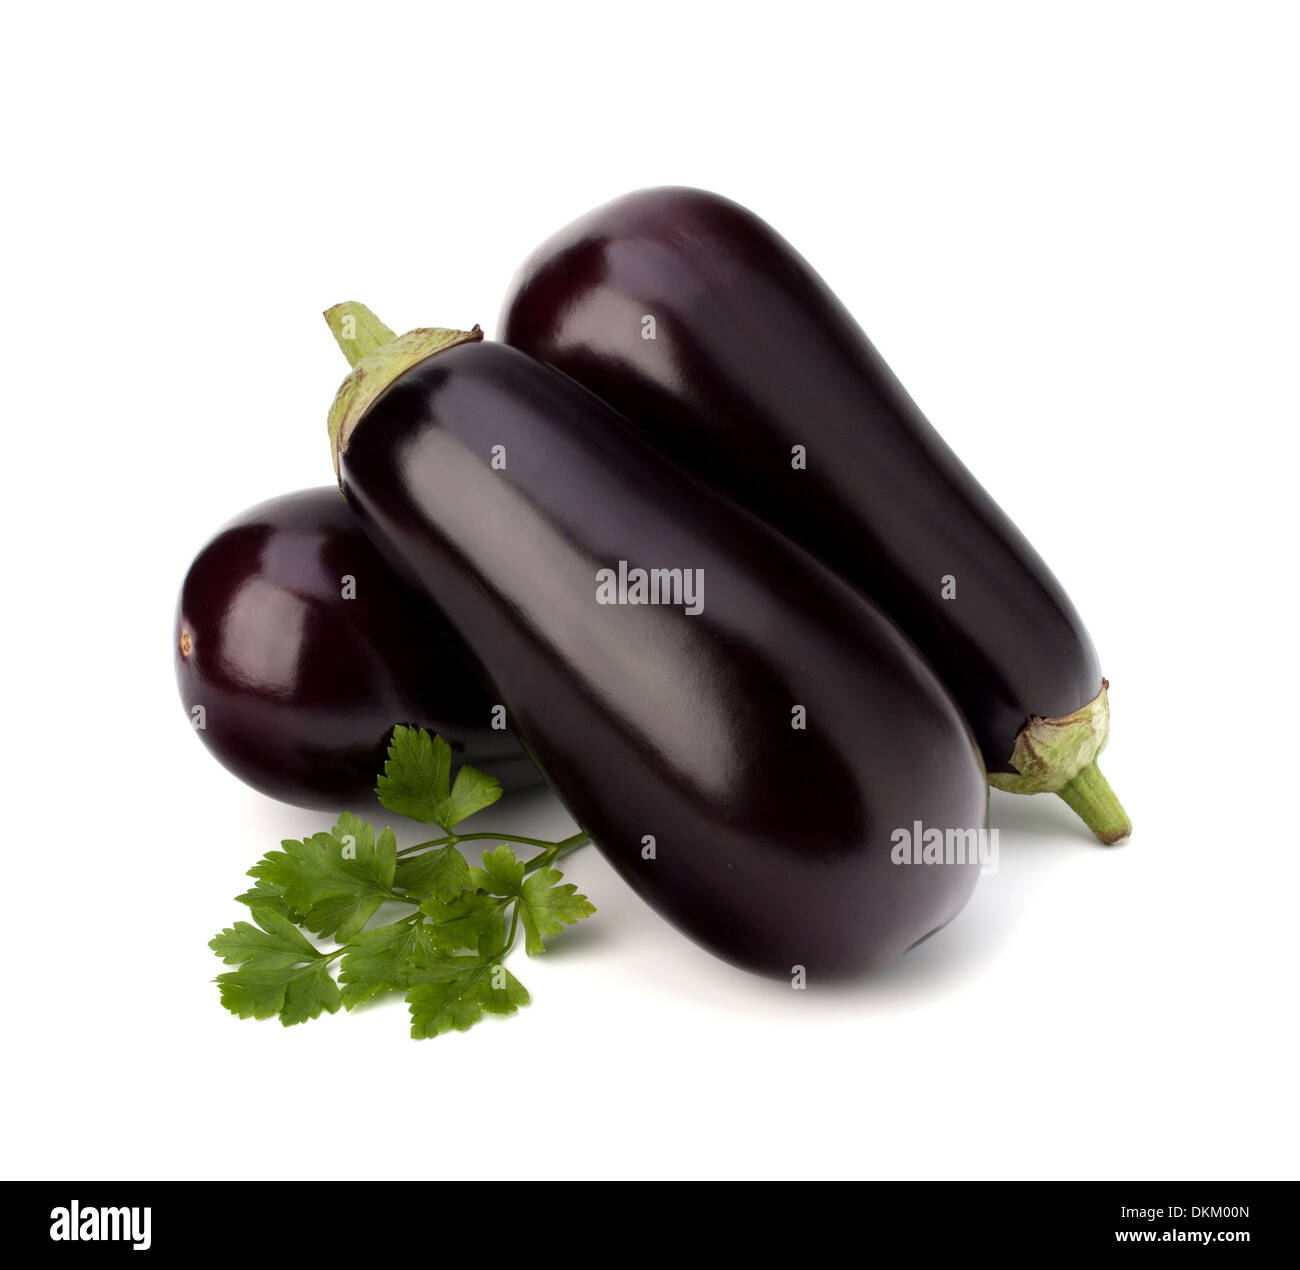 eggplant or aubergine and parsley leaf on white background Stock Photo